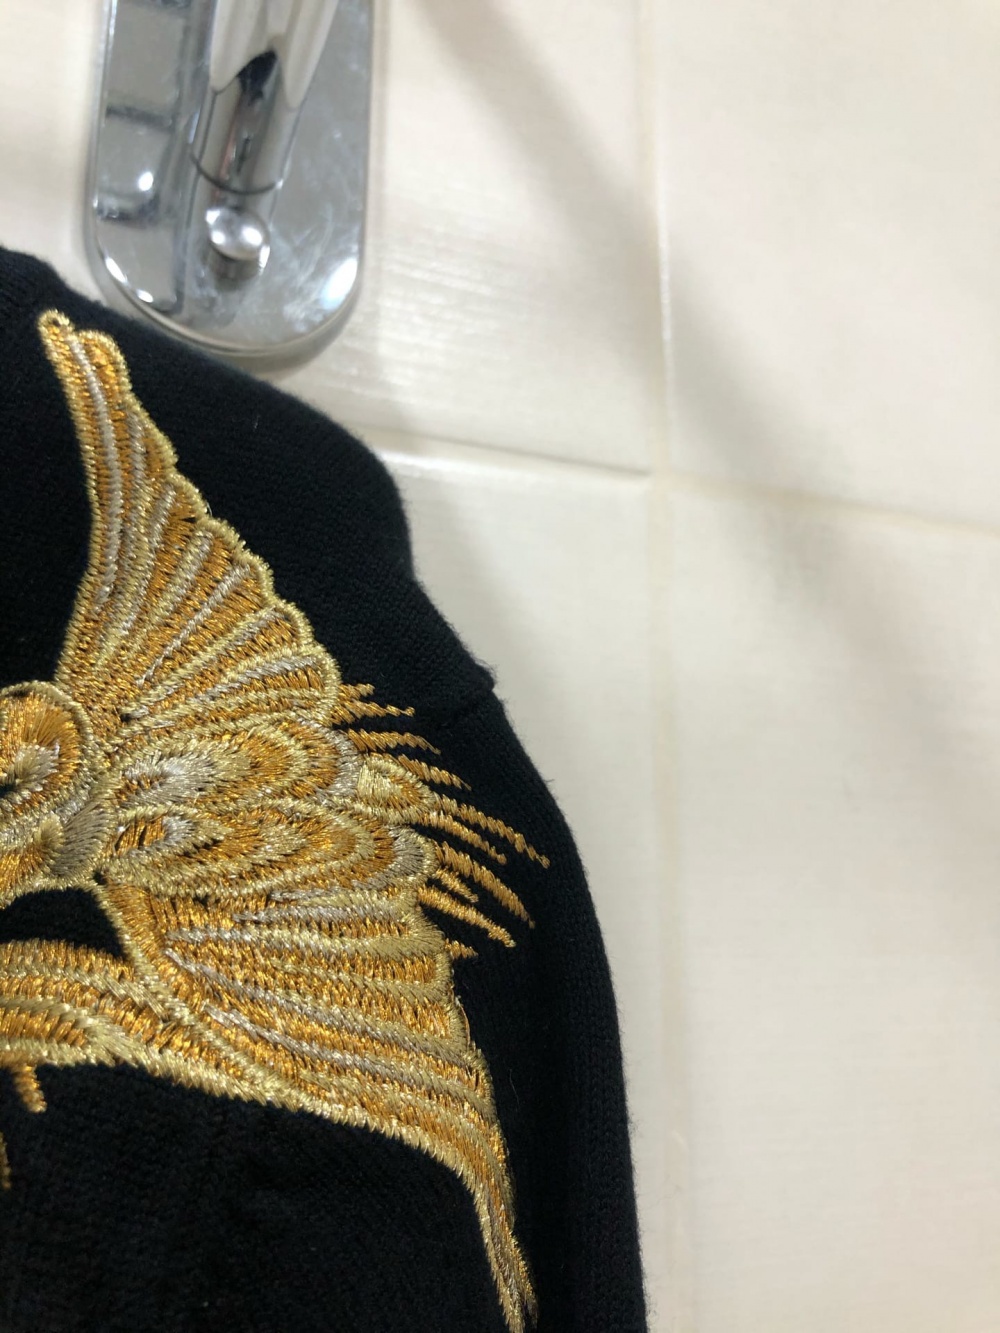 Джемпер Altuzarra For Target Golden Cranes Sweater.Размер М-L.